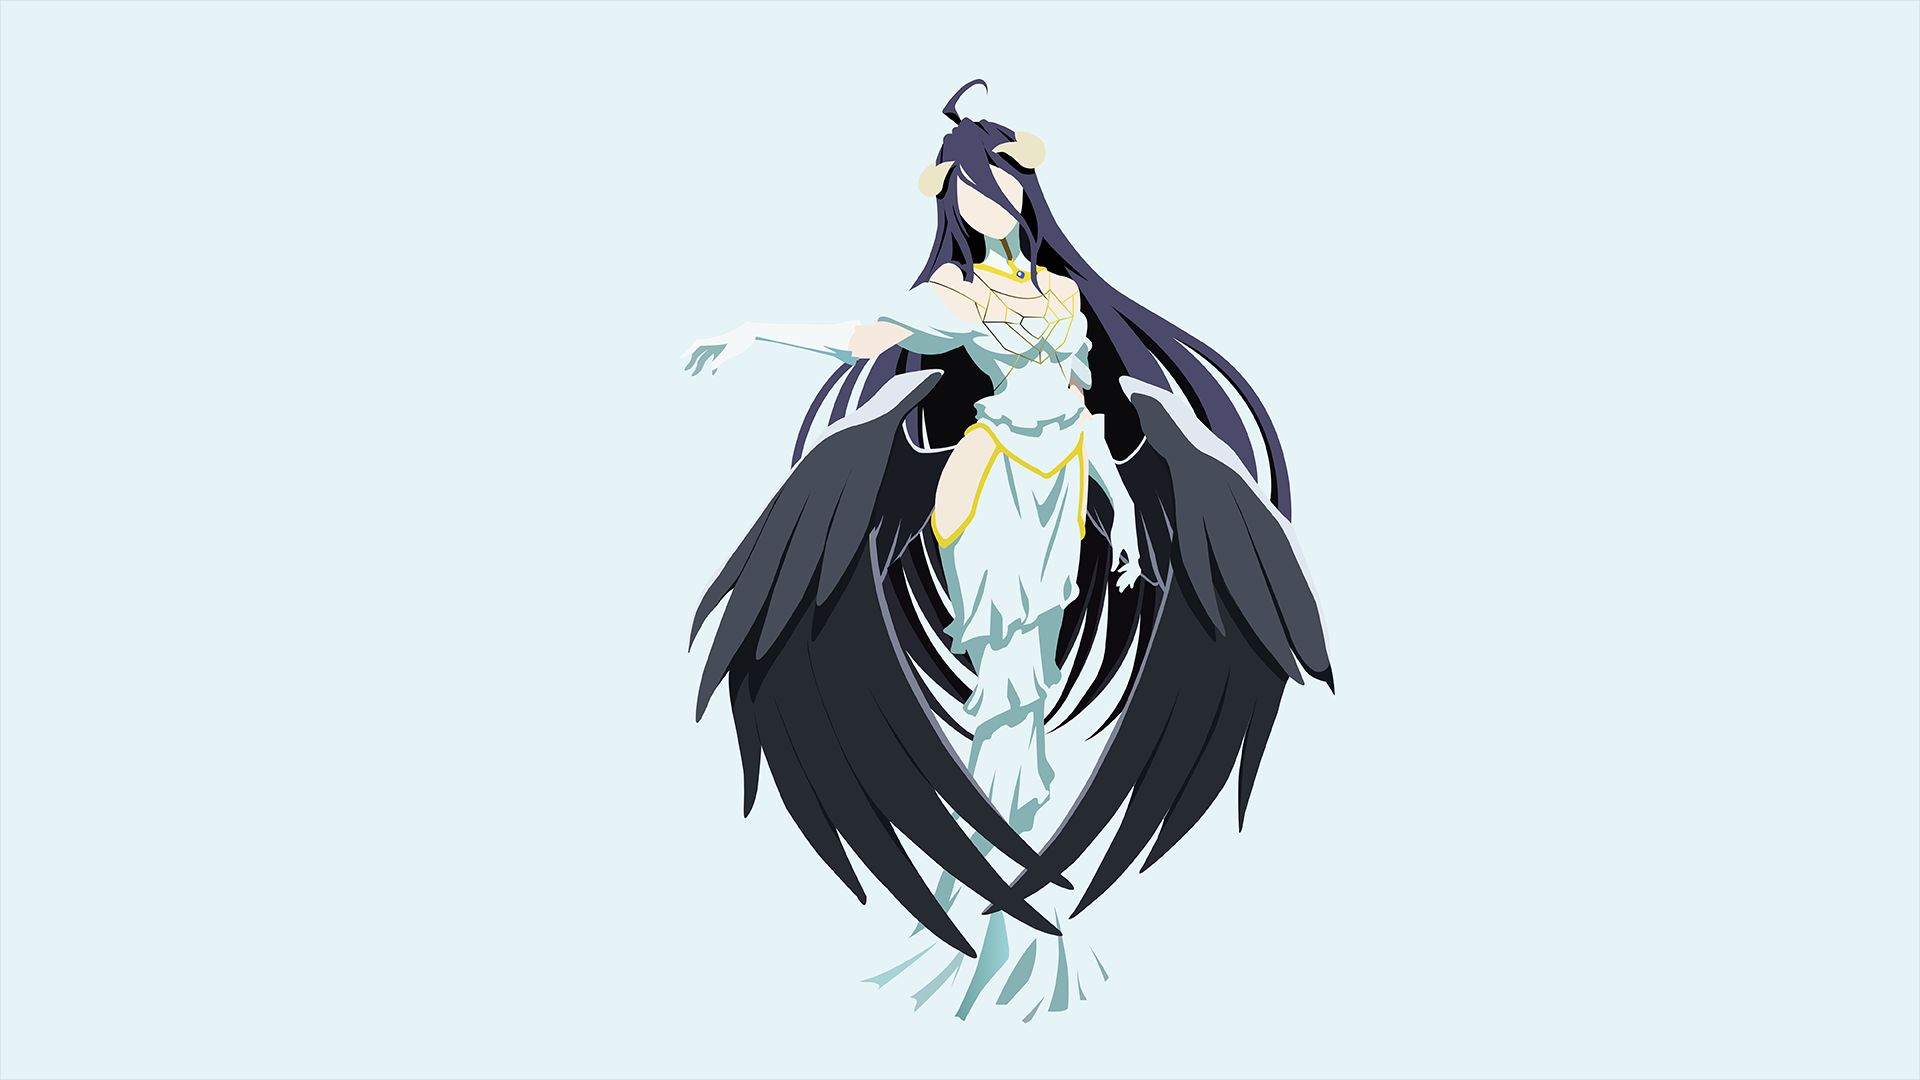 albedo (overlord), anime, overlord